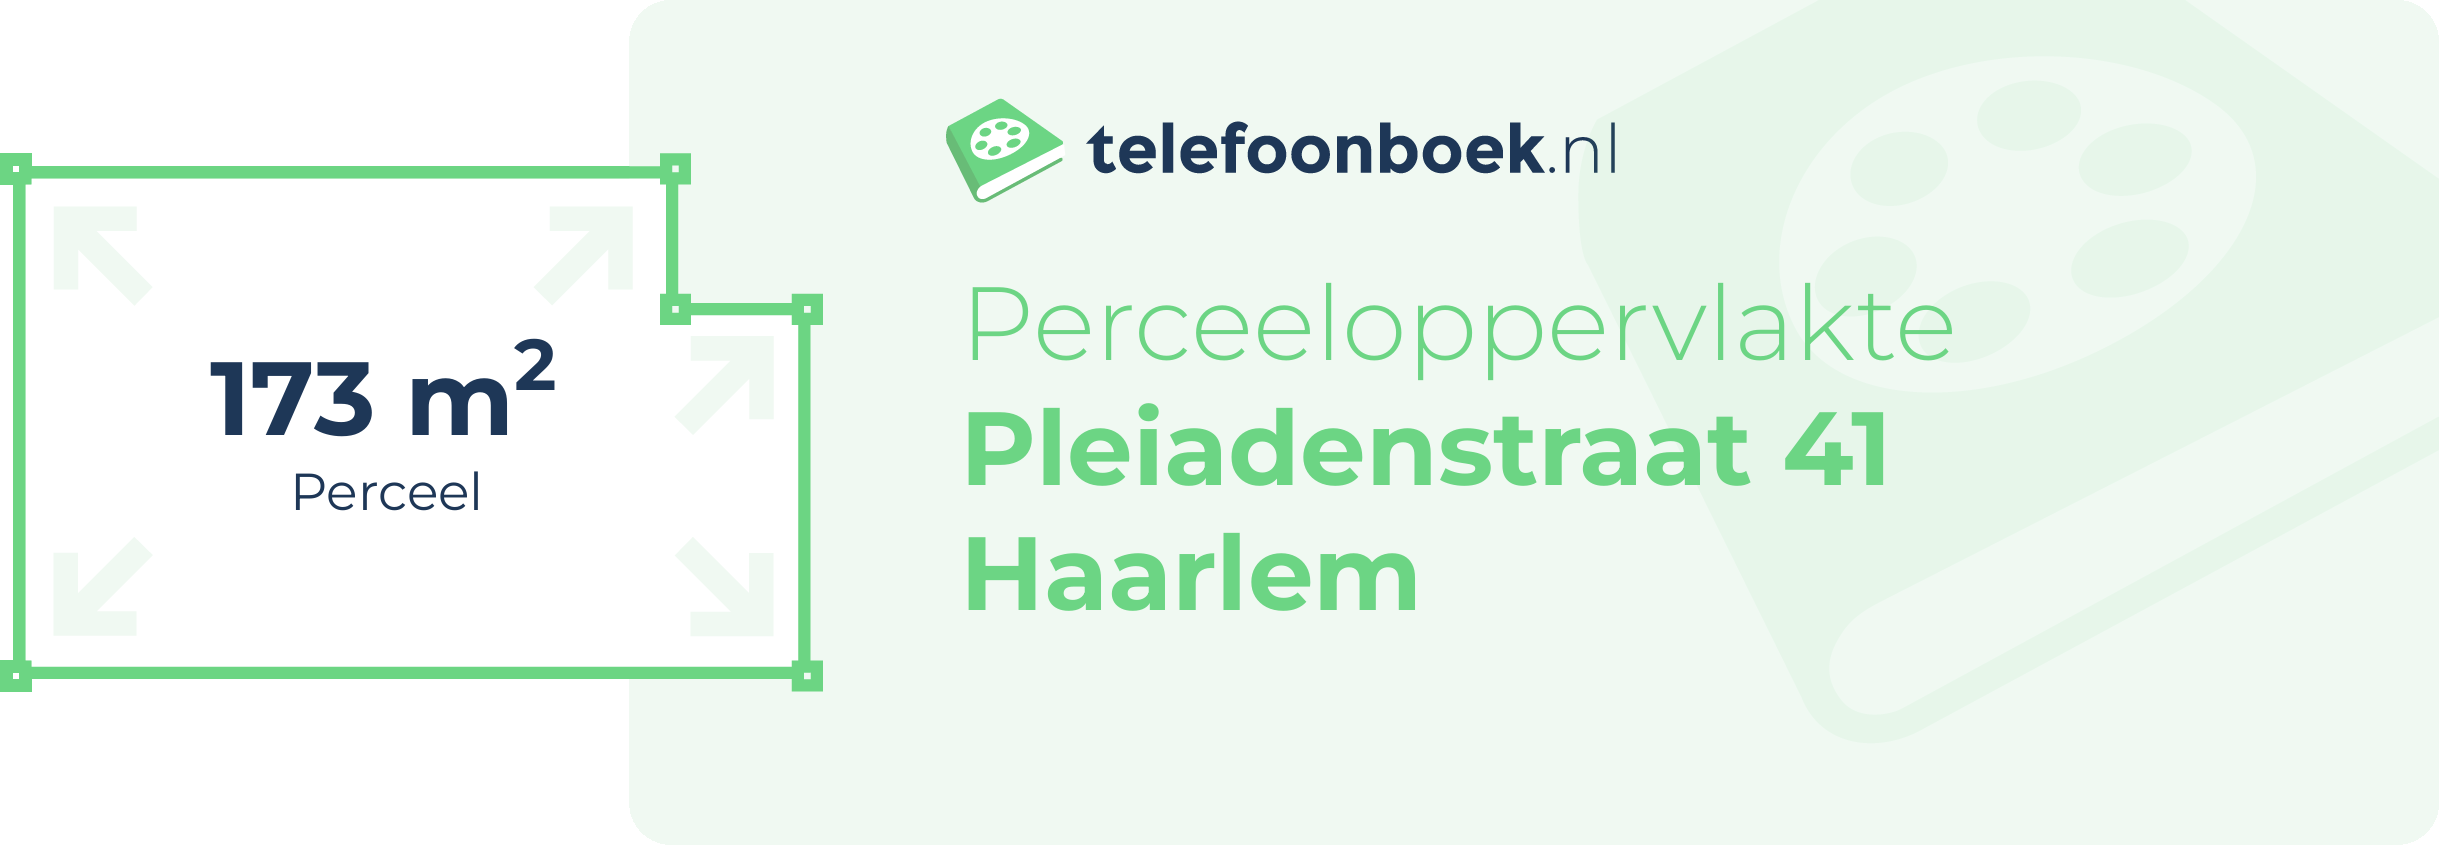 Perceeloppervlakte Pleiadenstraat 41 Haarlem